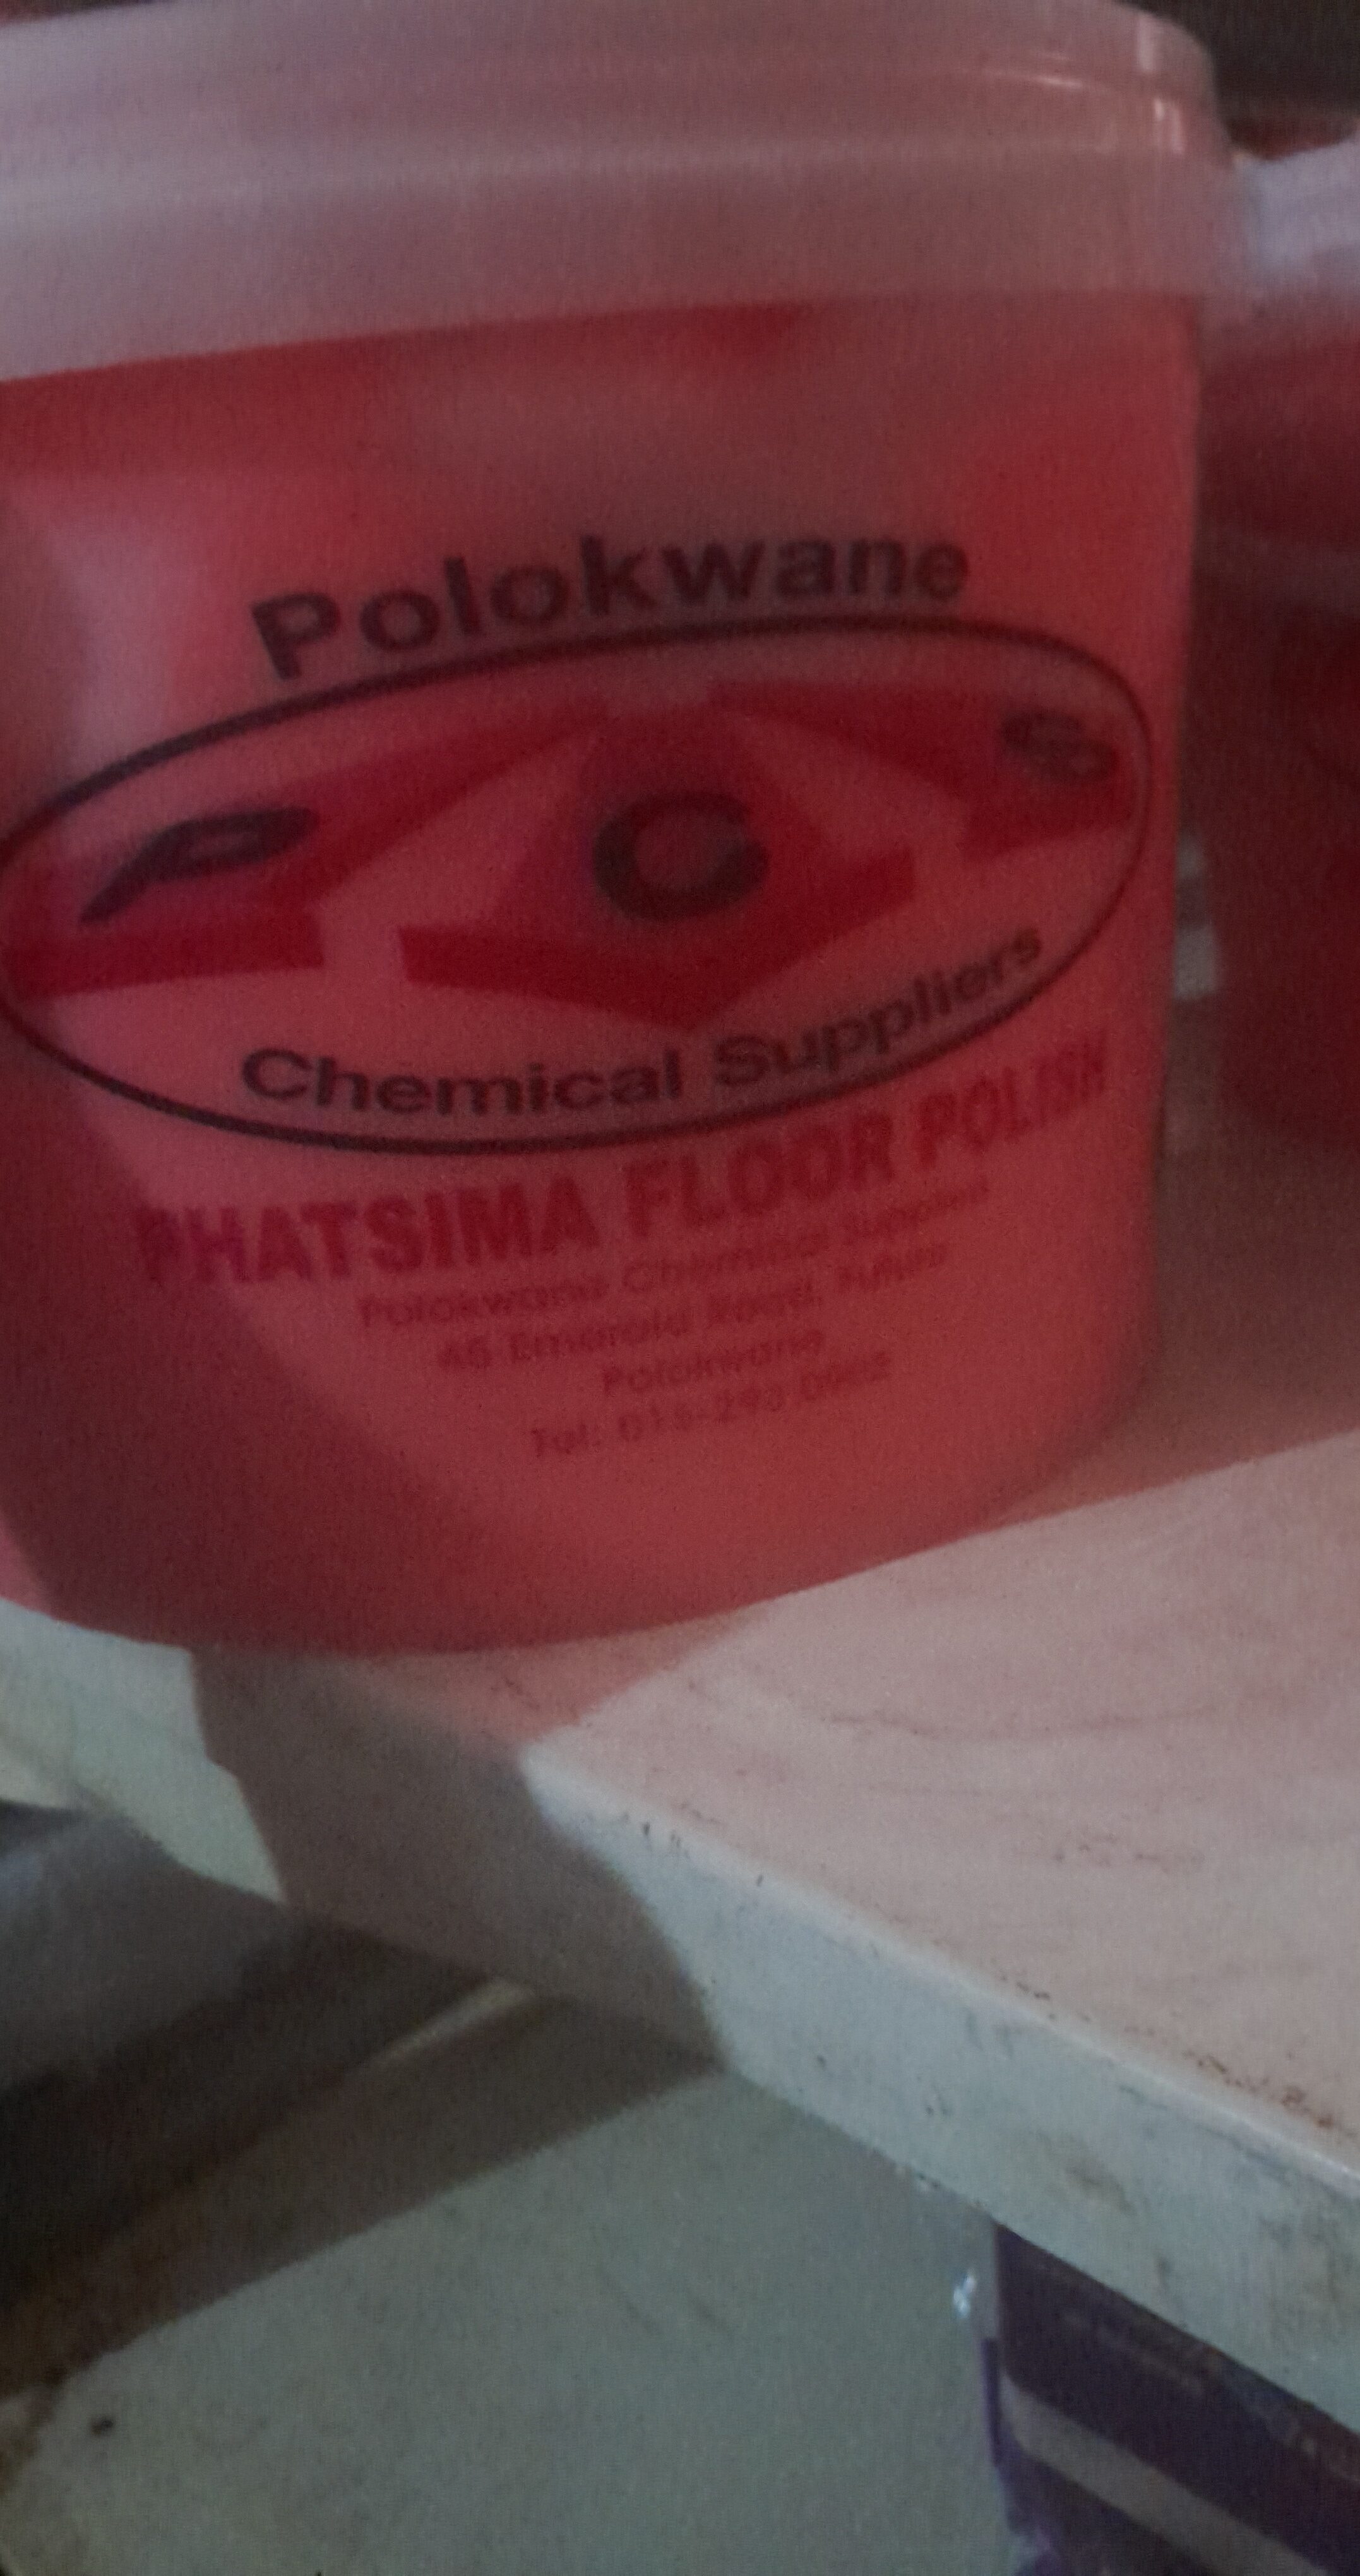 PHATSIMA FLOOR POLISH 5 litre - Product - en